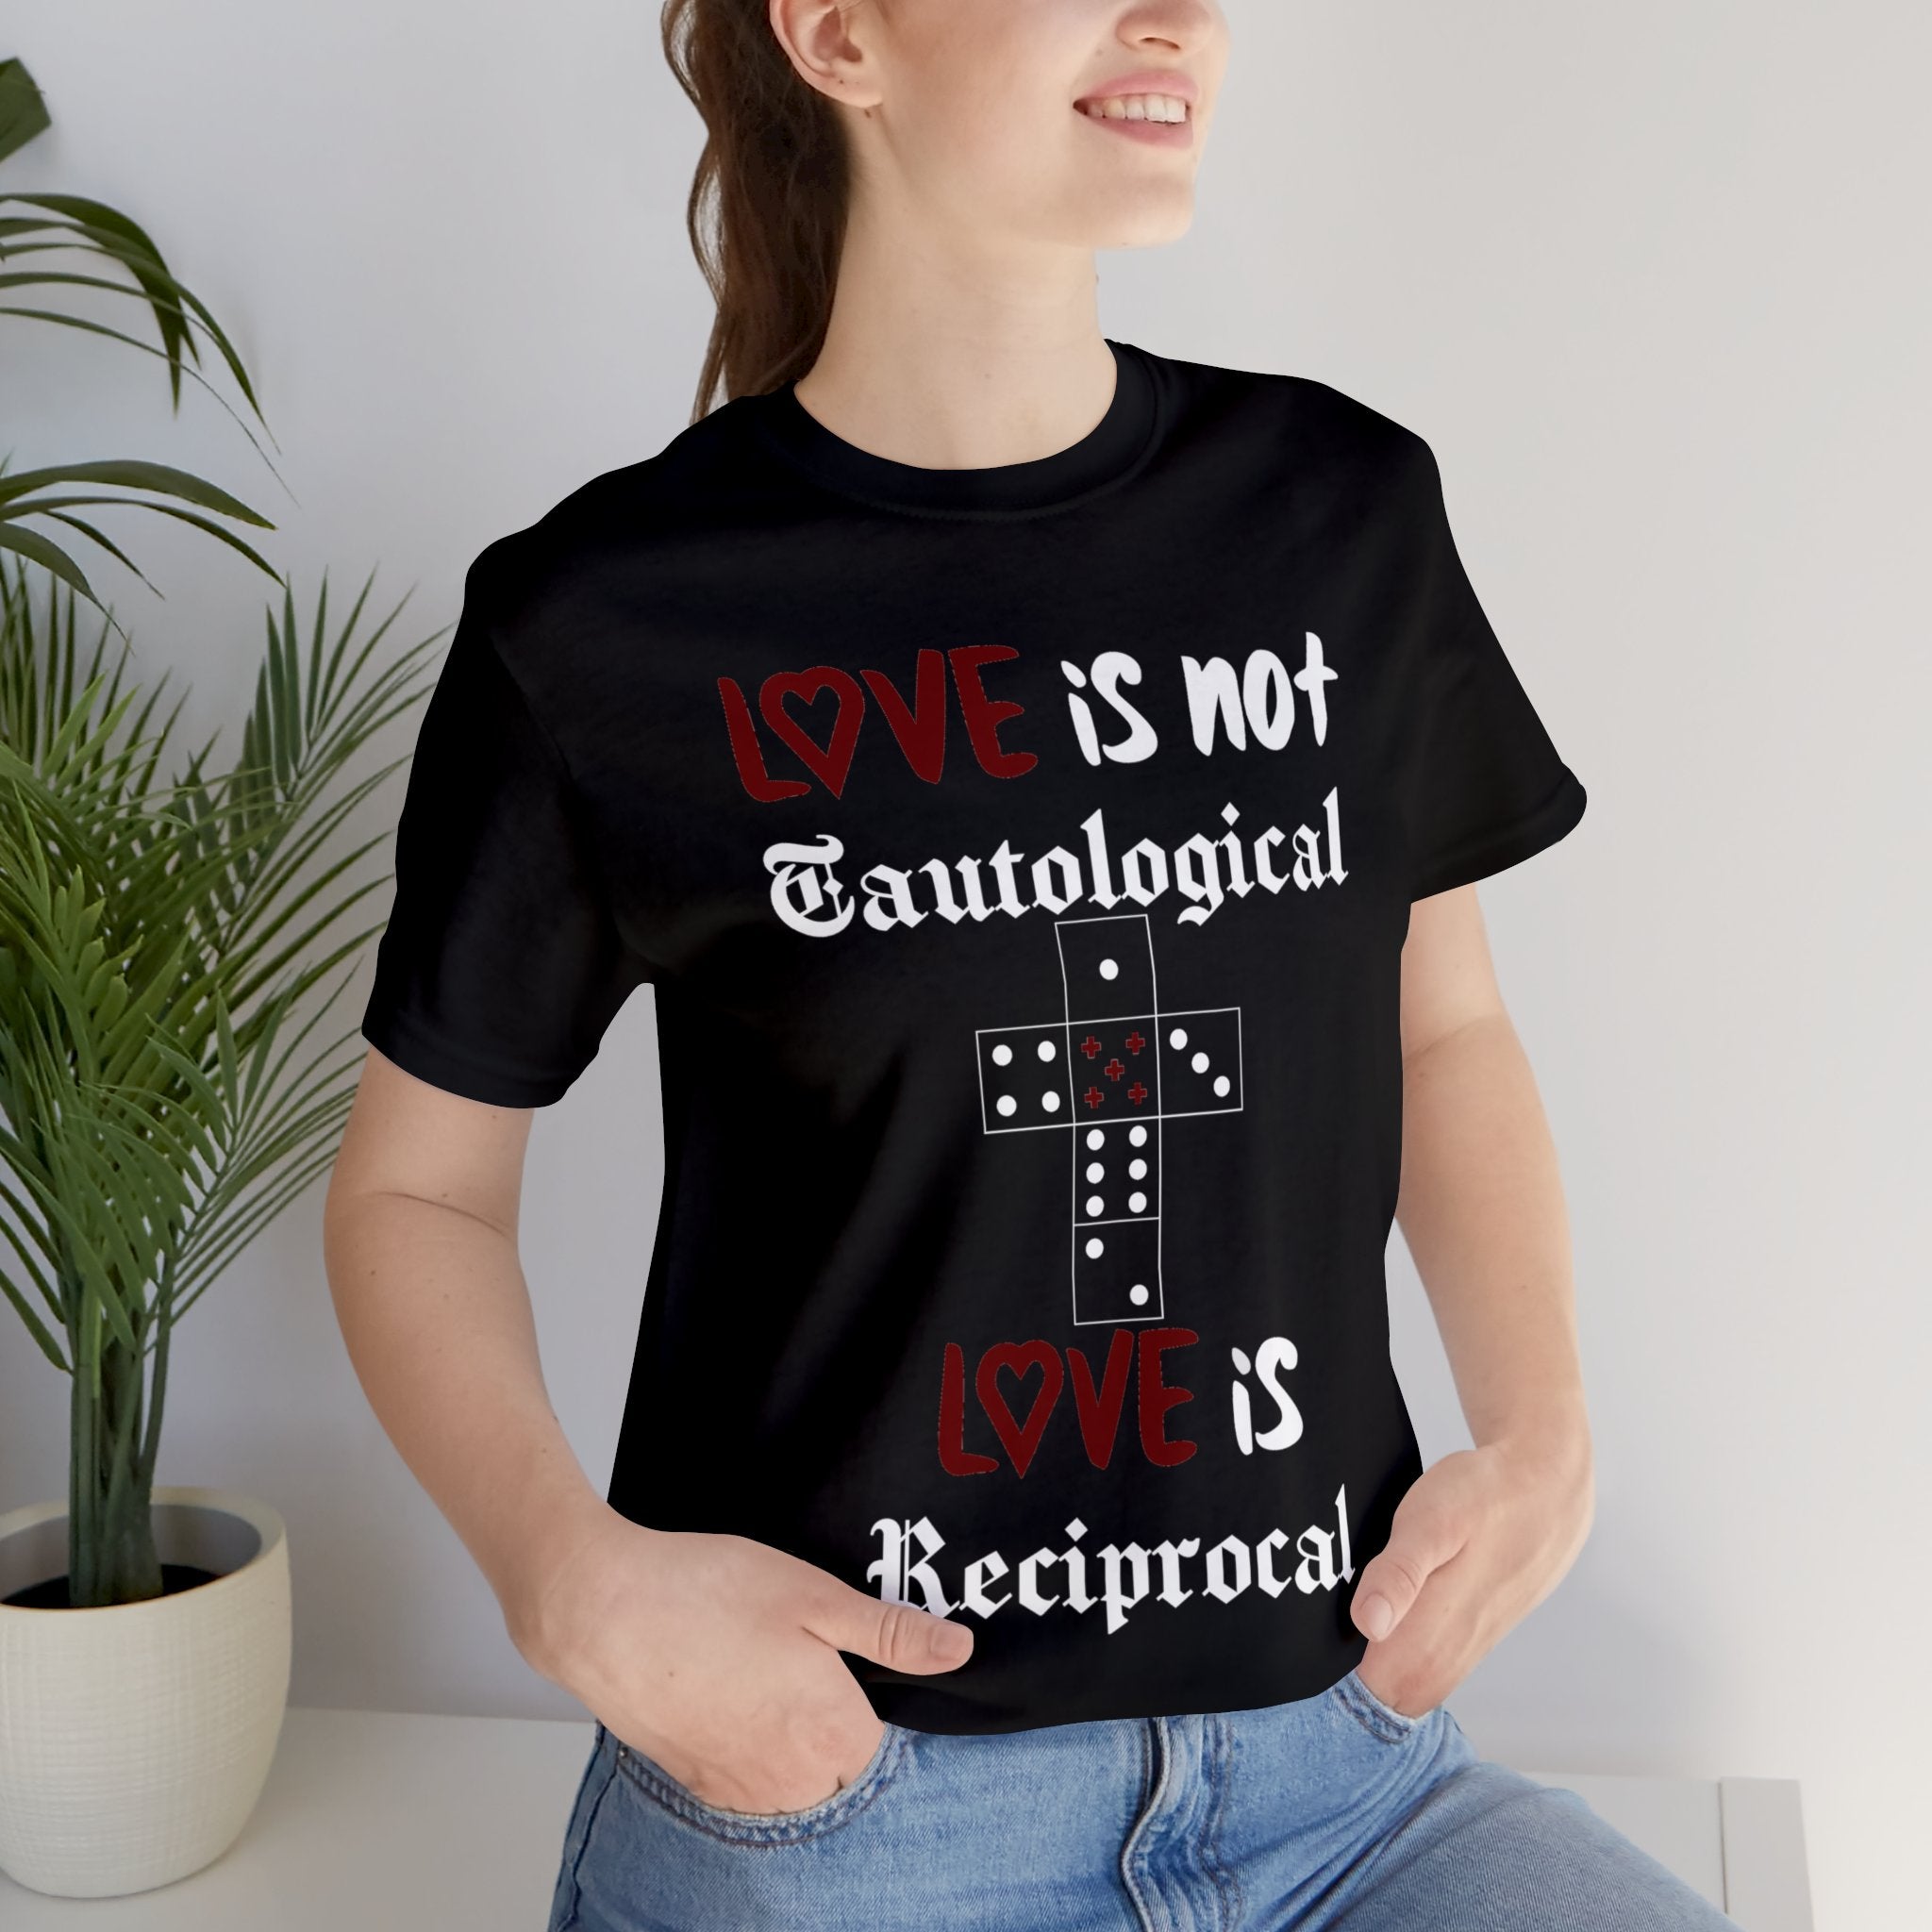 Love is Reciprocal - Cross